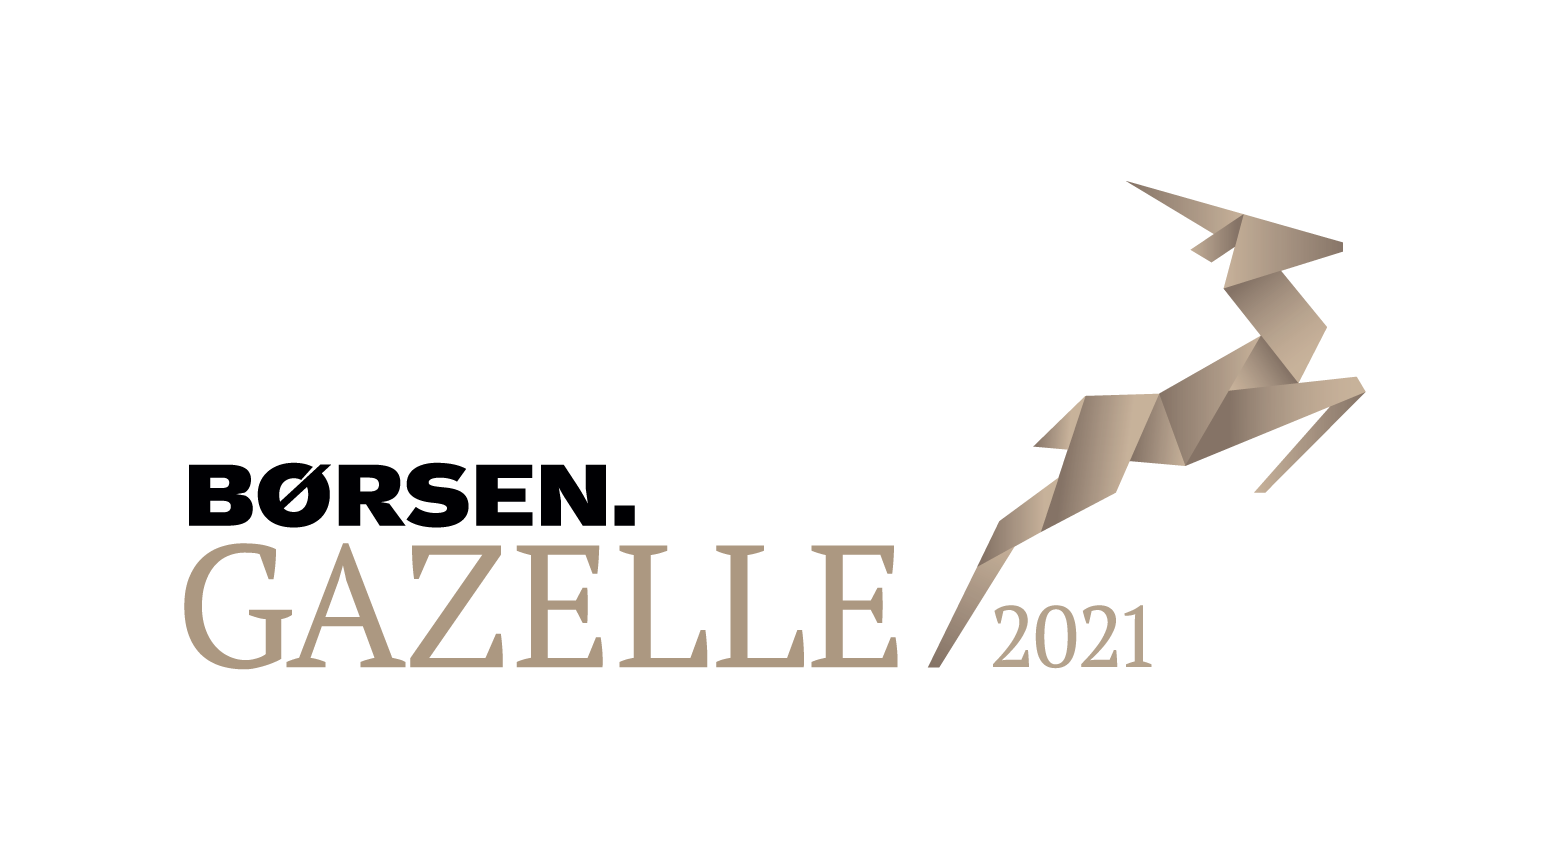 Horsens Rengøring er Gazelle 2021